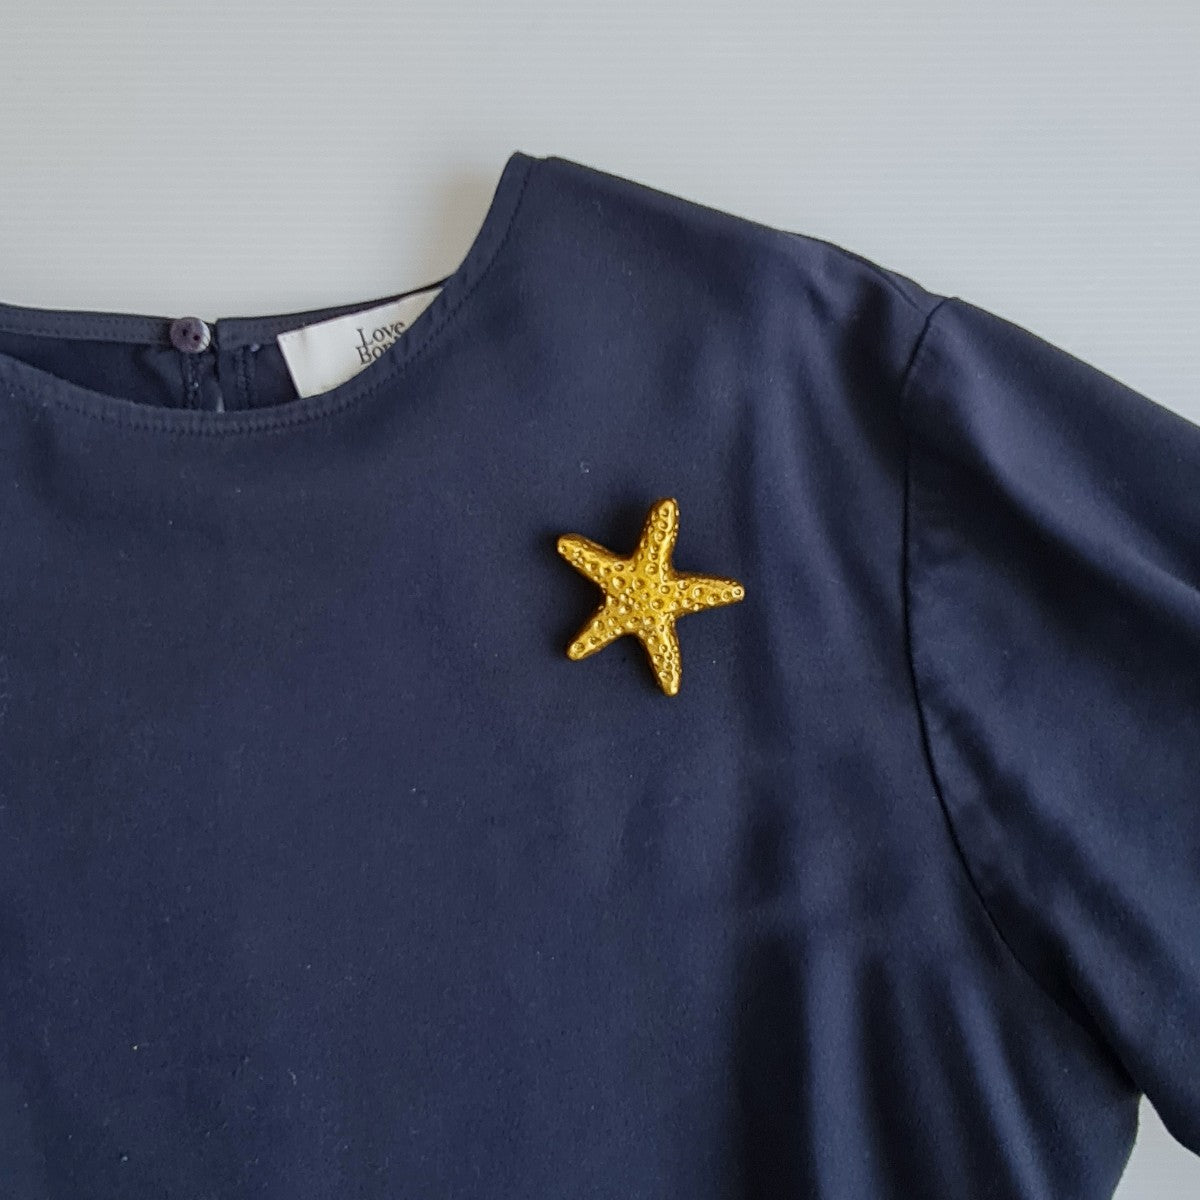 Starfish Gold Brooch